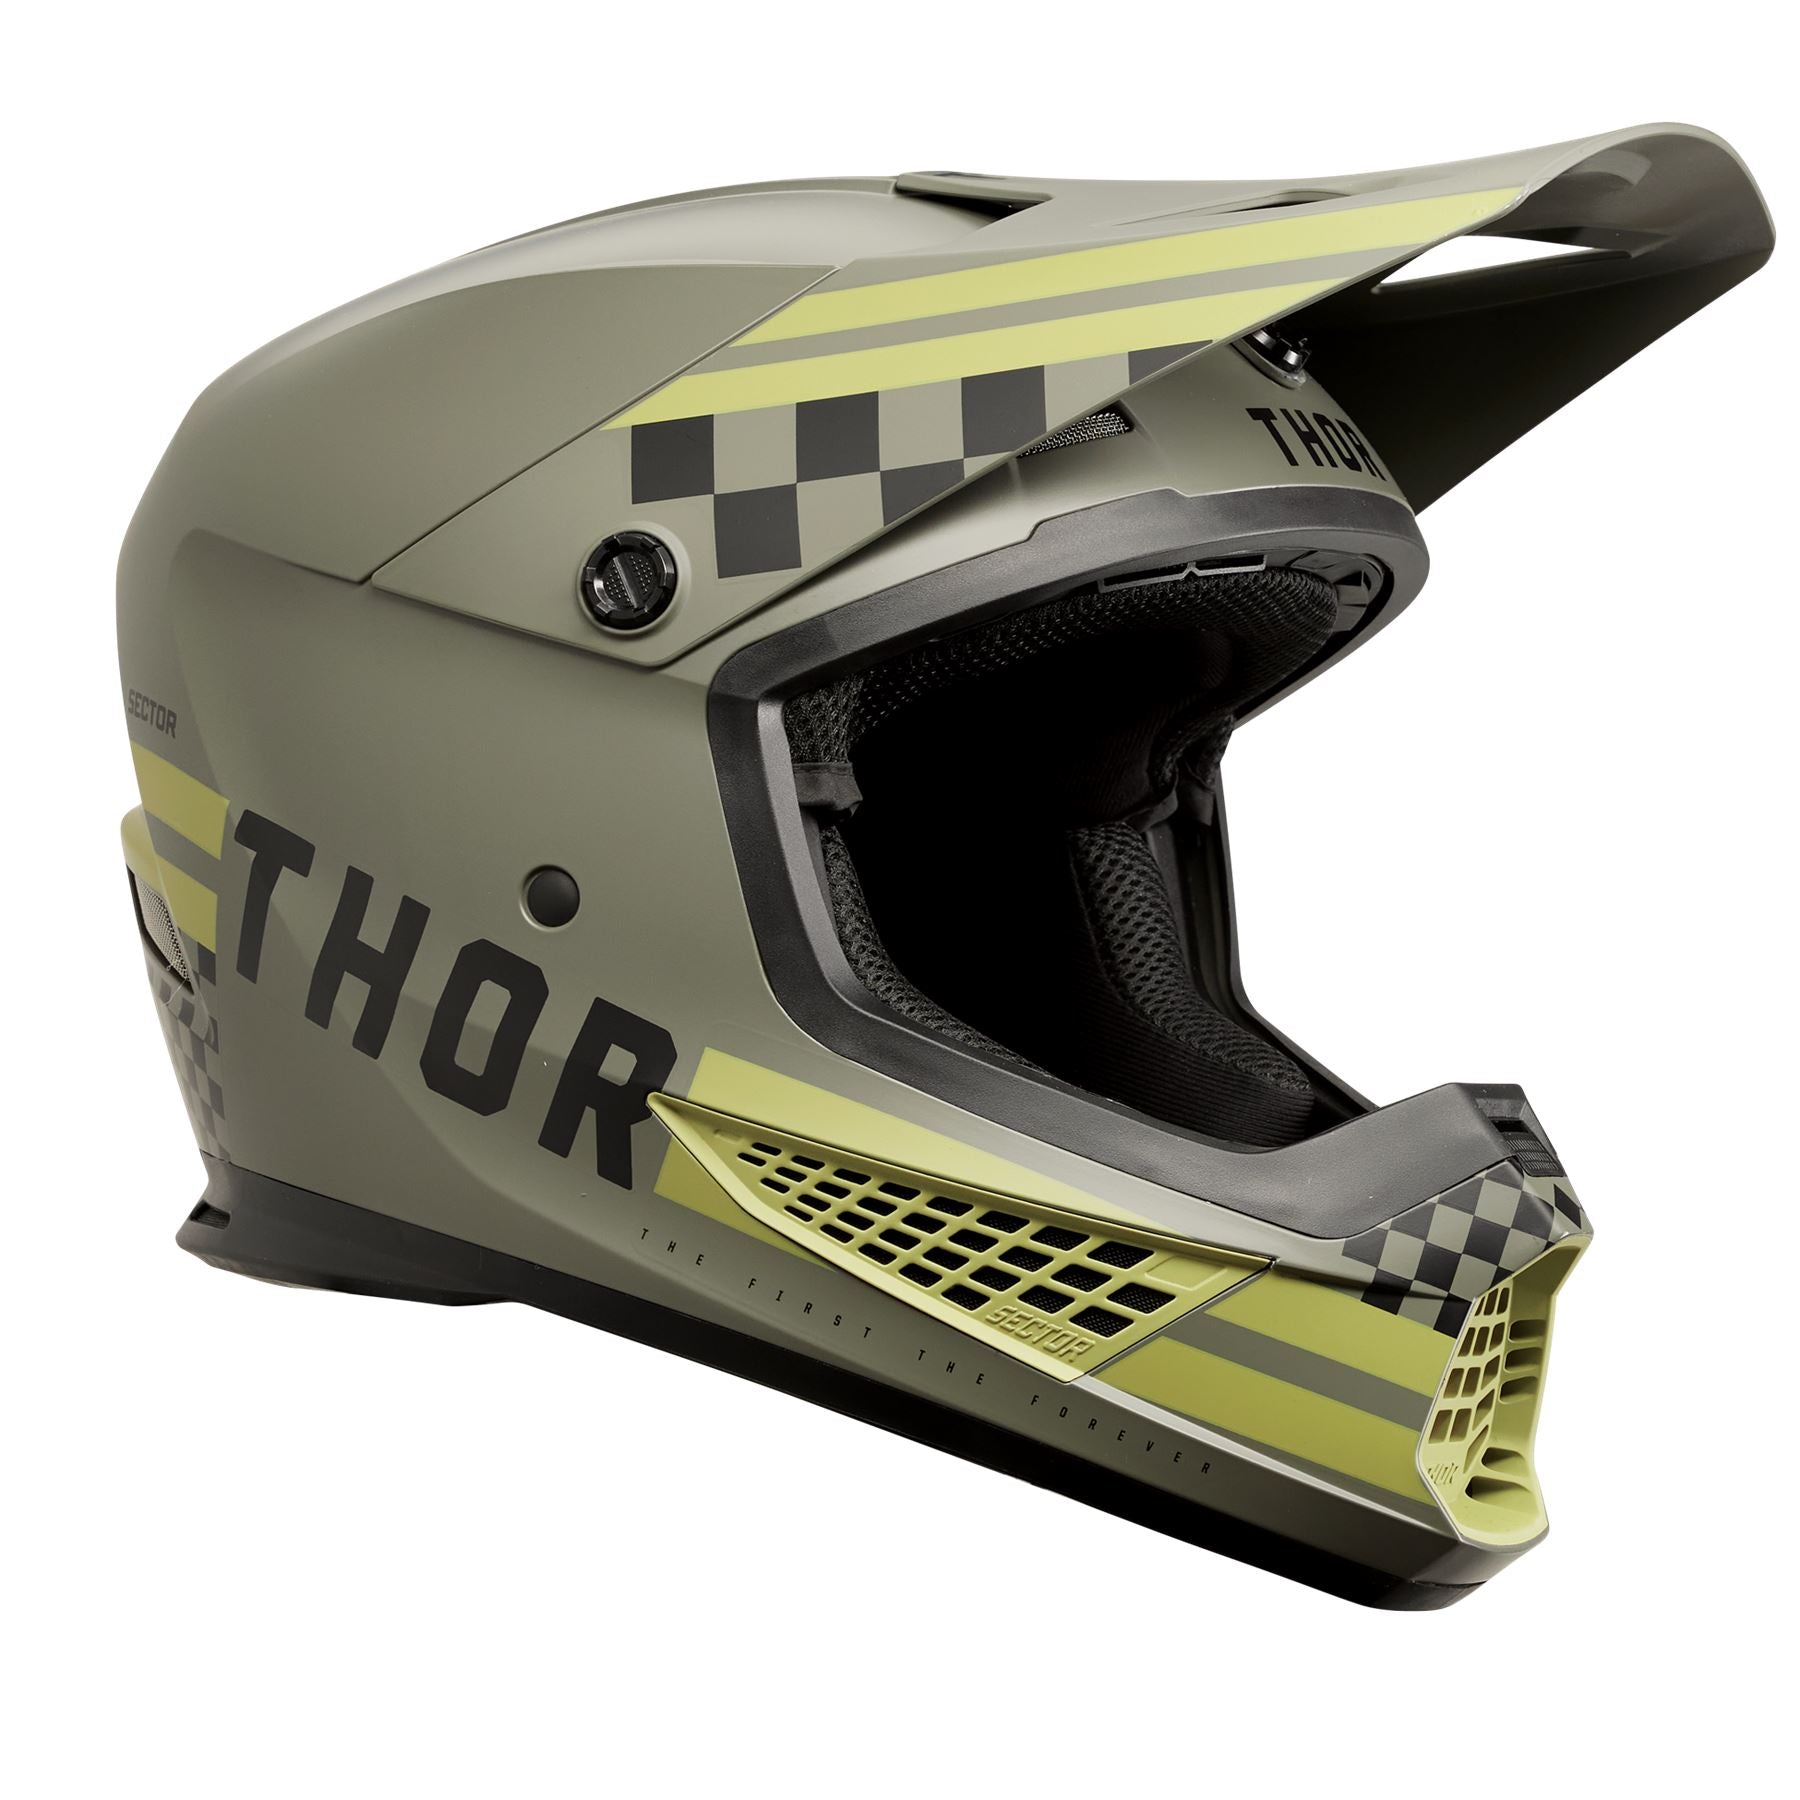 Thor Motocross Helmet Sector 2 Combat Army Green